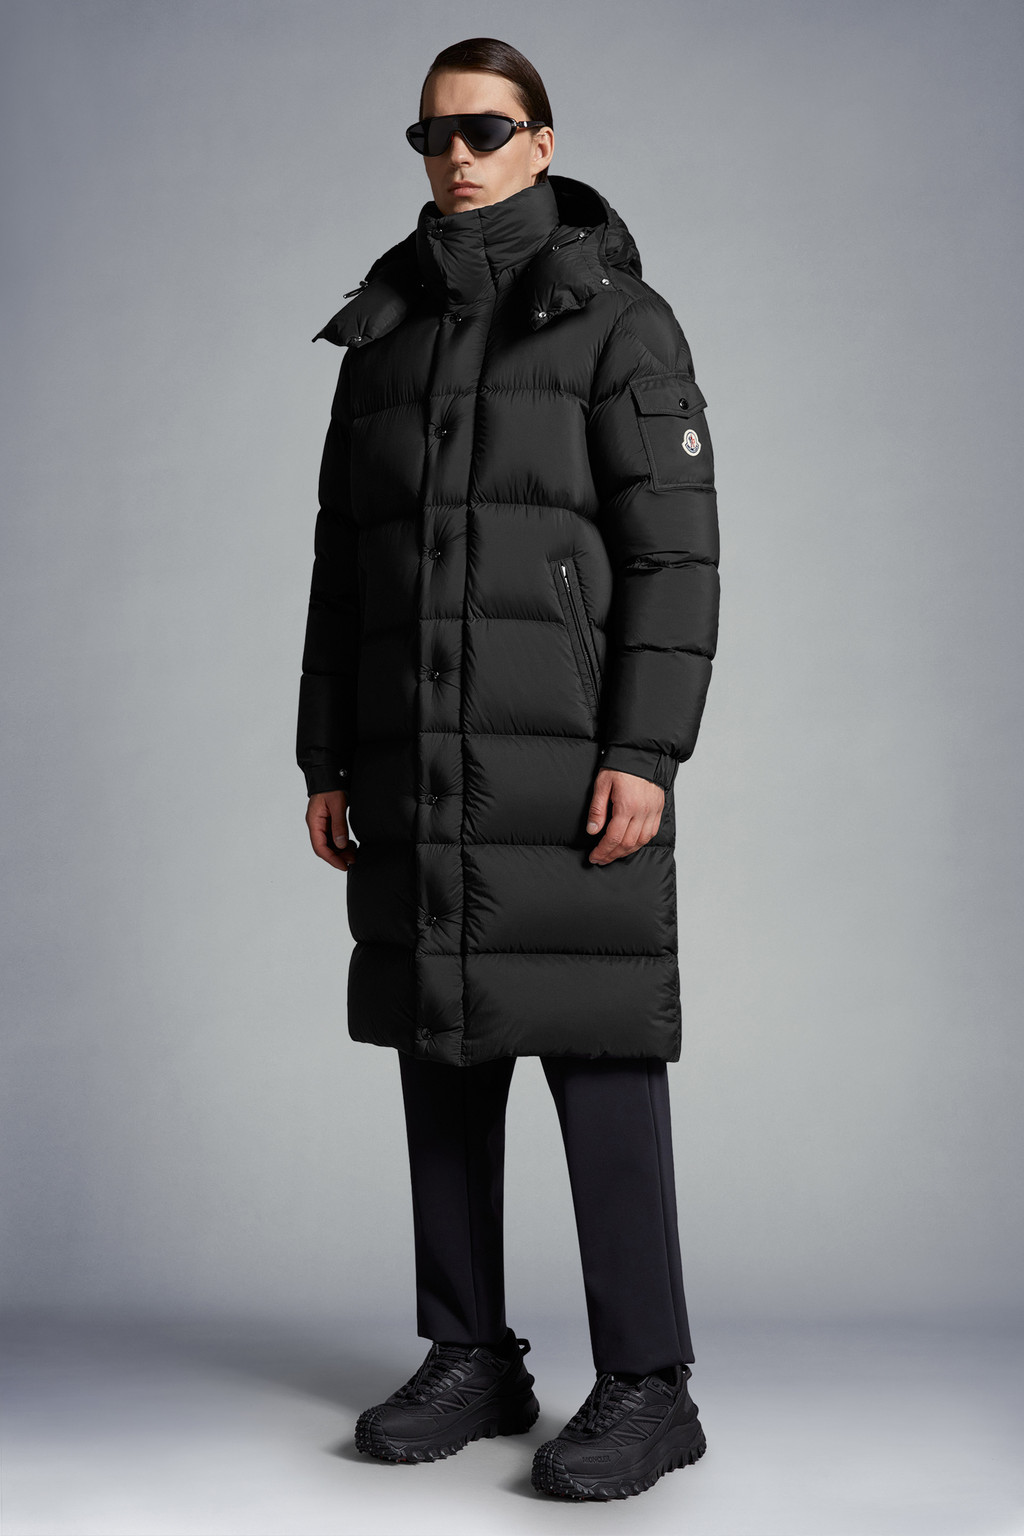 FAVOCENT 2021 Autumn Winter Men Suit Jacket Korean New Business Long Jacket  Slim Casual Windbreaker Jacket Men Trench Coat Fashion Overcoat | Lazada PH